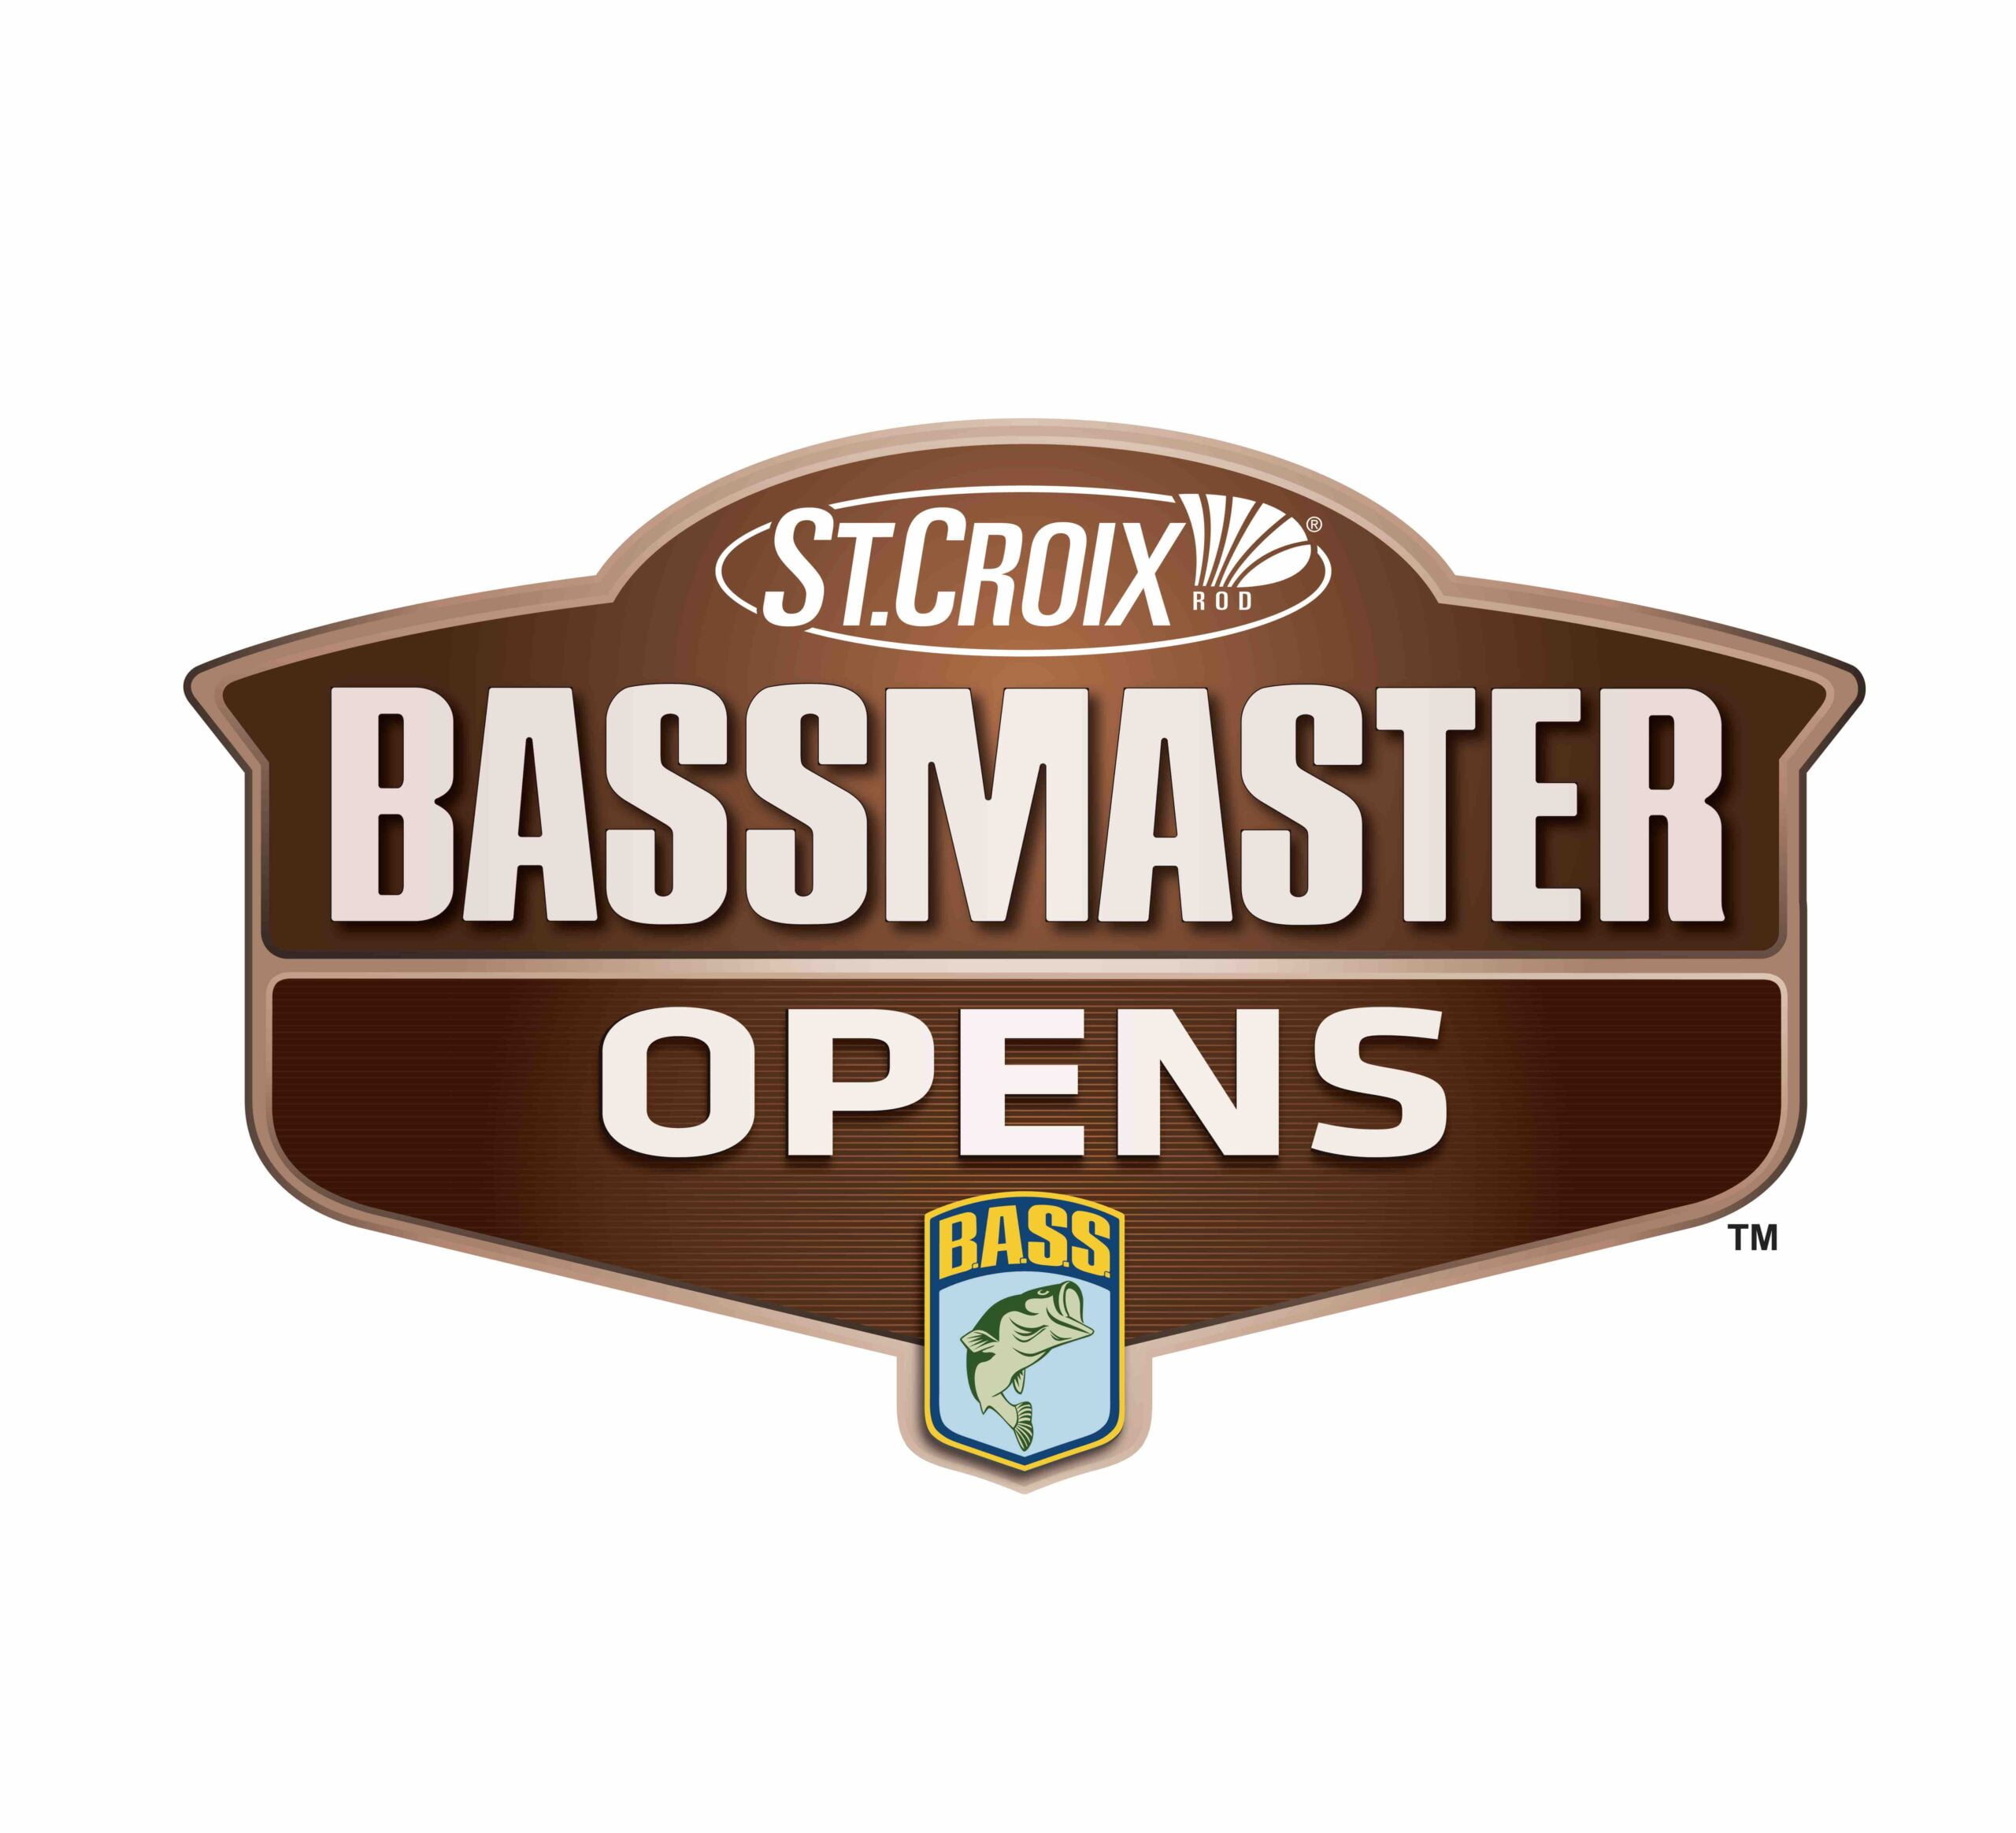 B.A.S.S. Bassmaster Opens